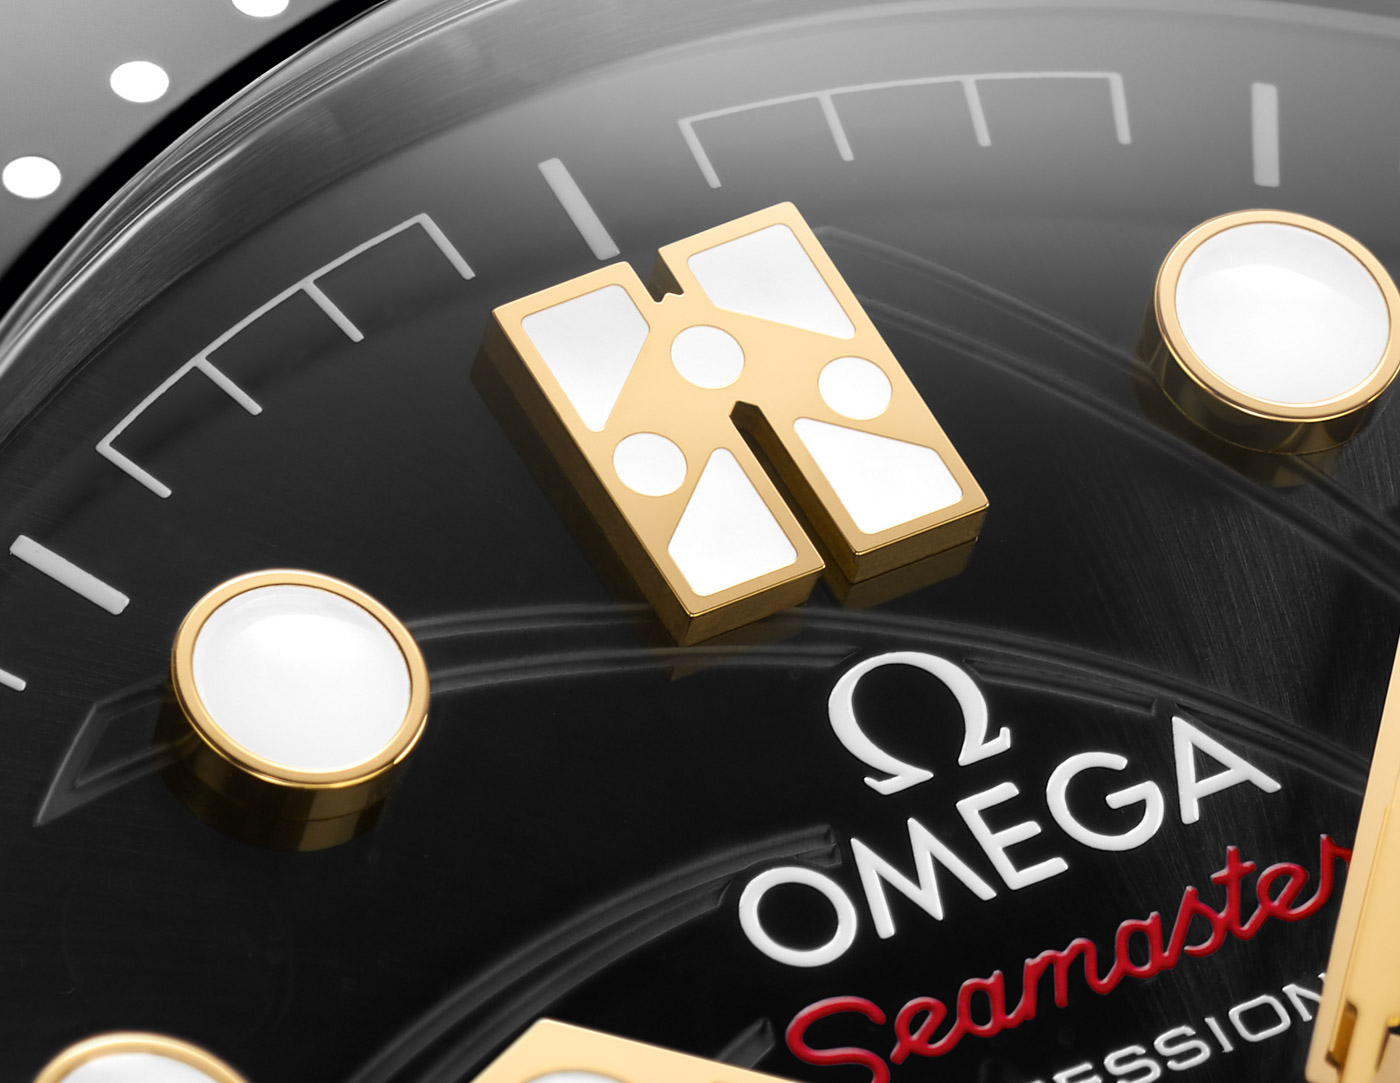 Omega Seamaster Diver 300M 007 James Bond On Her Majesty's Secret Service Watch Omega Seamaster Watch Releases 